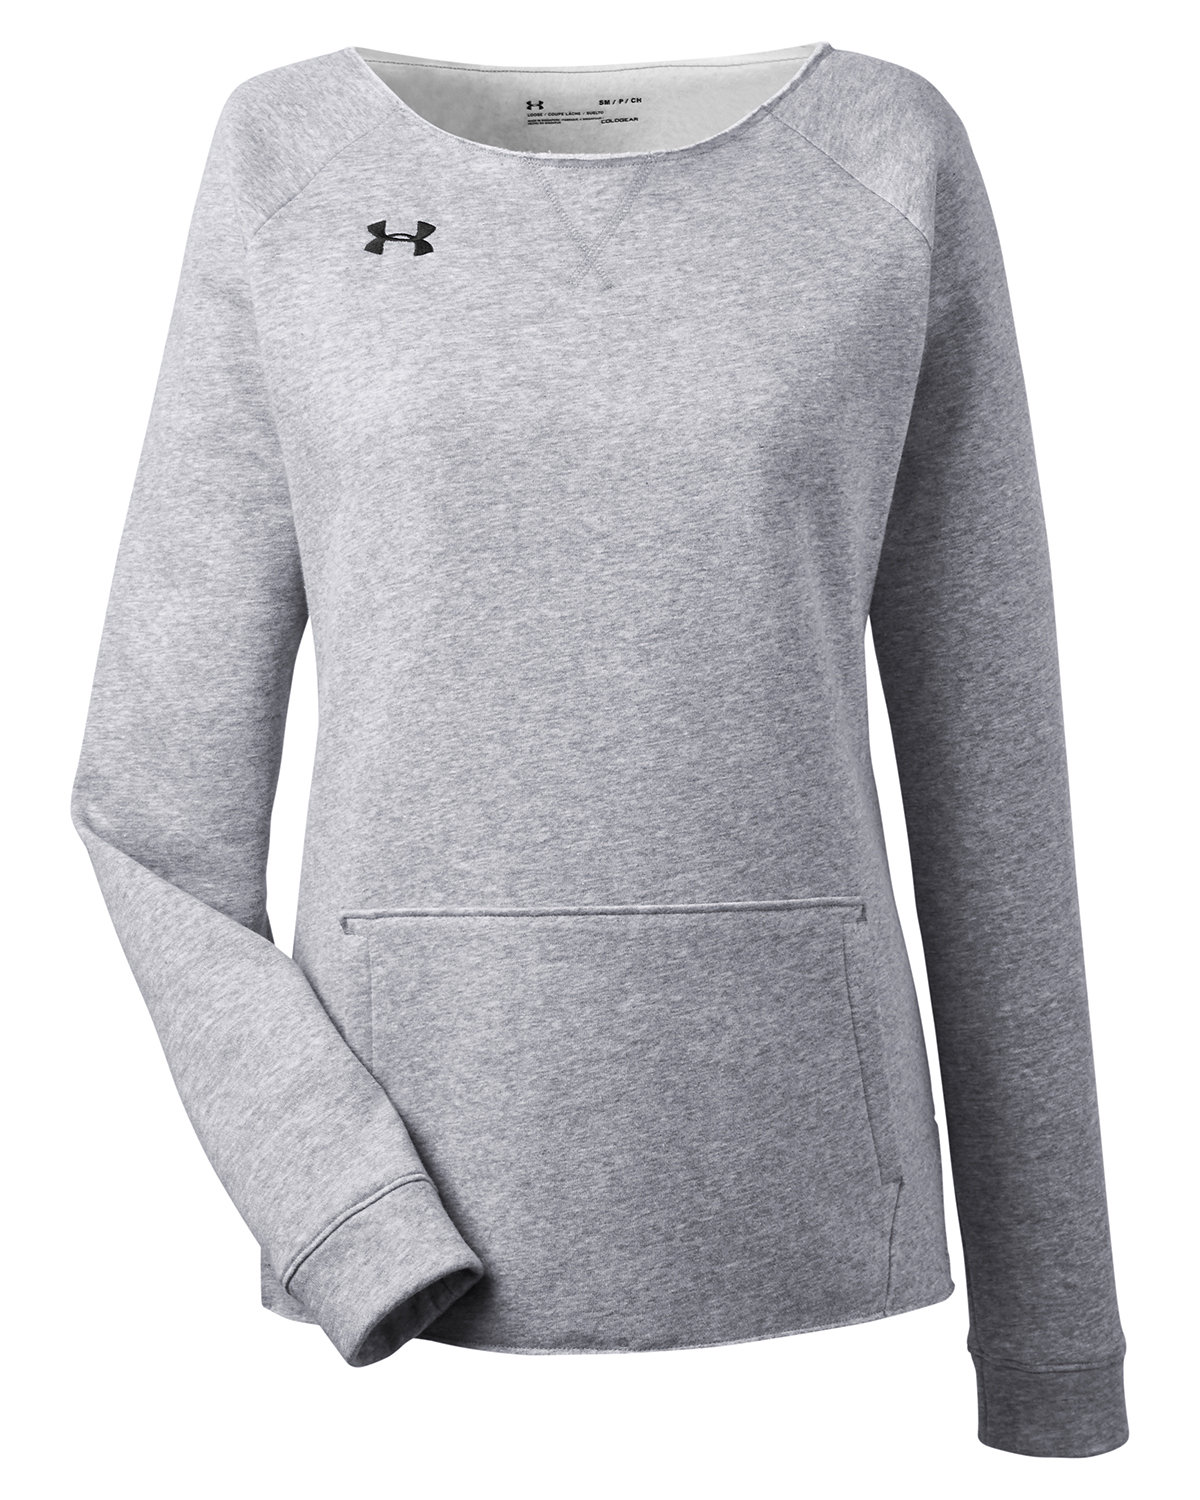 Branded Under Armour Ladies’ Hustle Fleece Crewneck Sweatshirt True Grey Heather/Black